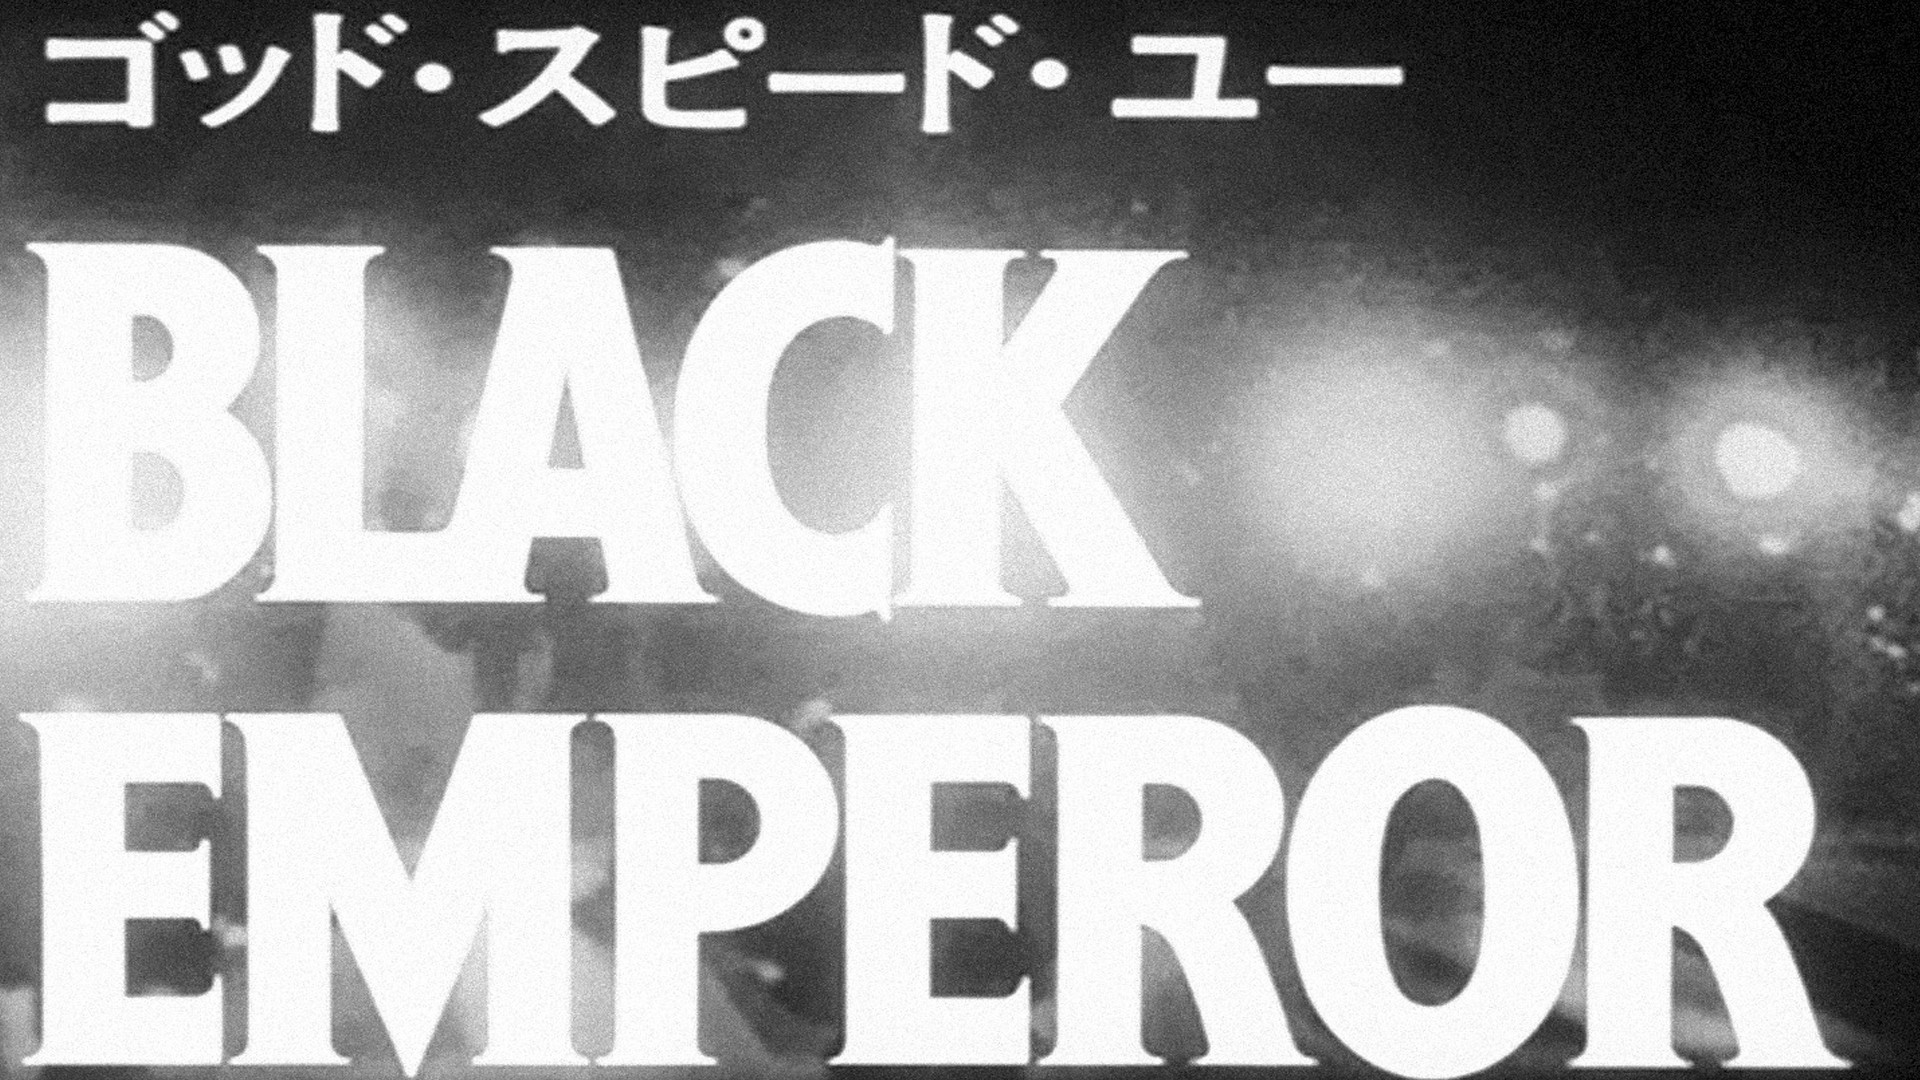 General 1920x1080 music Godspeed You! Black Emperor monochrome digital art